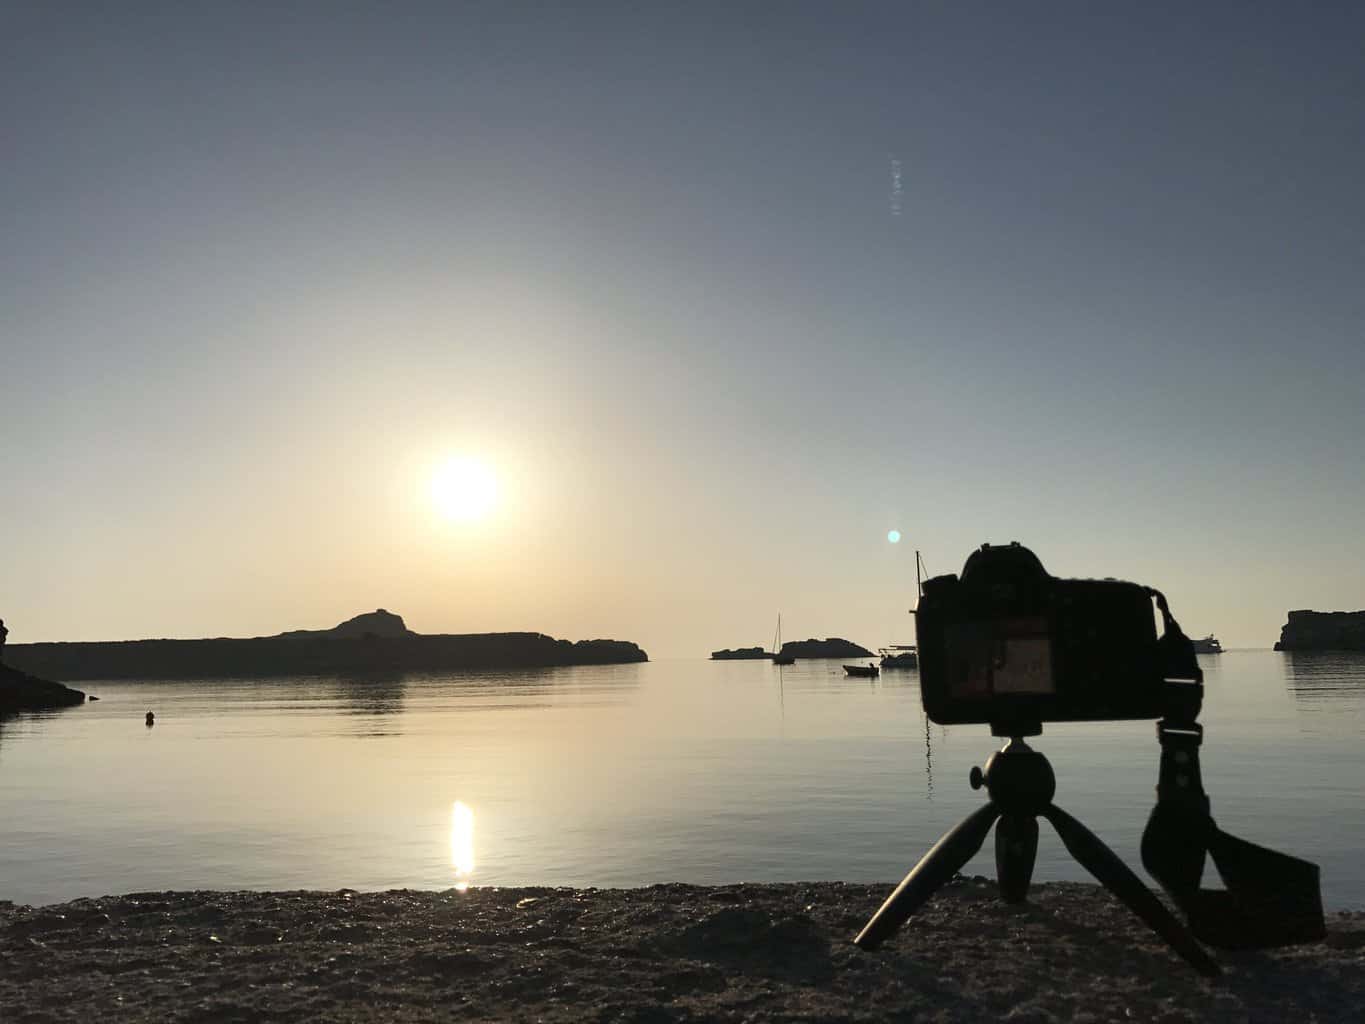  Sunrise at Lindos Beach by me, travel photographer Rick McEvoy 